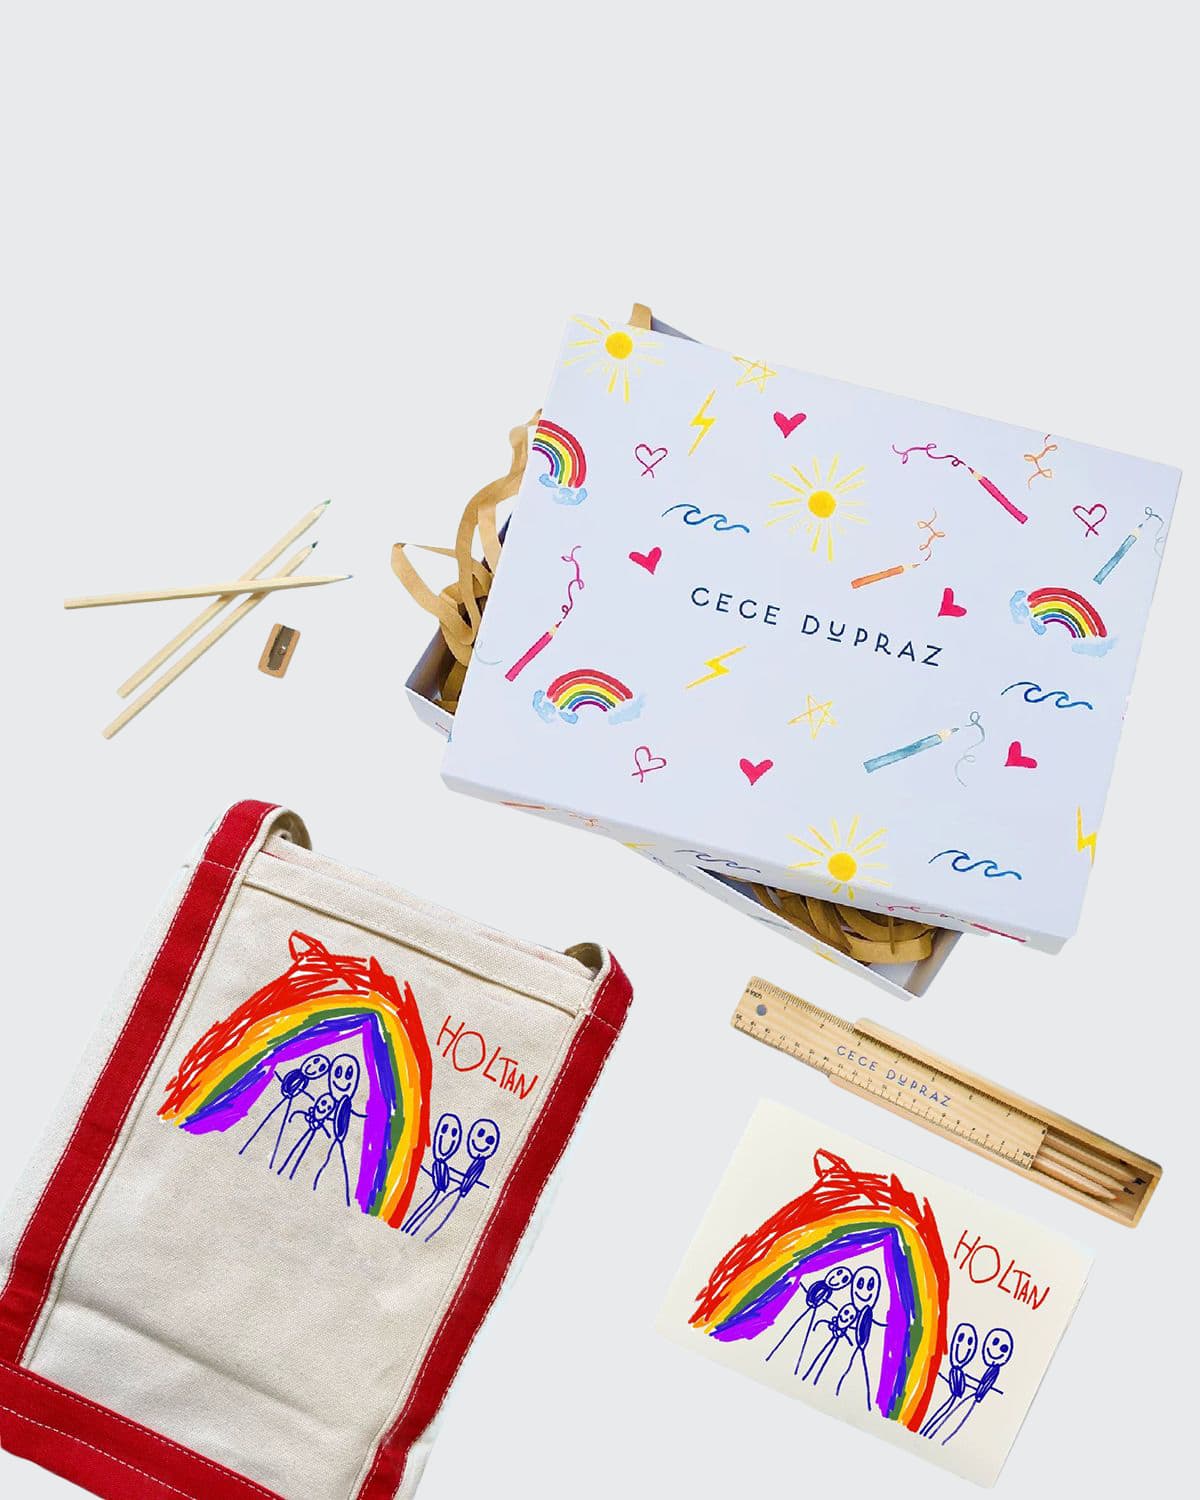 Cece DuPraz Draw Your Own Tote Bag Kit